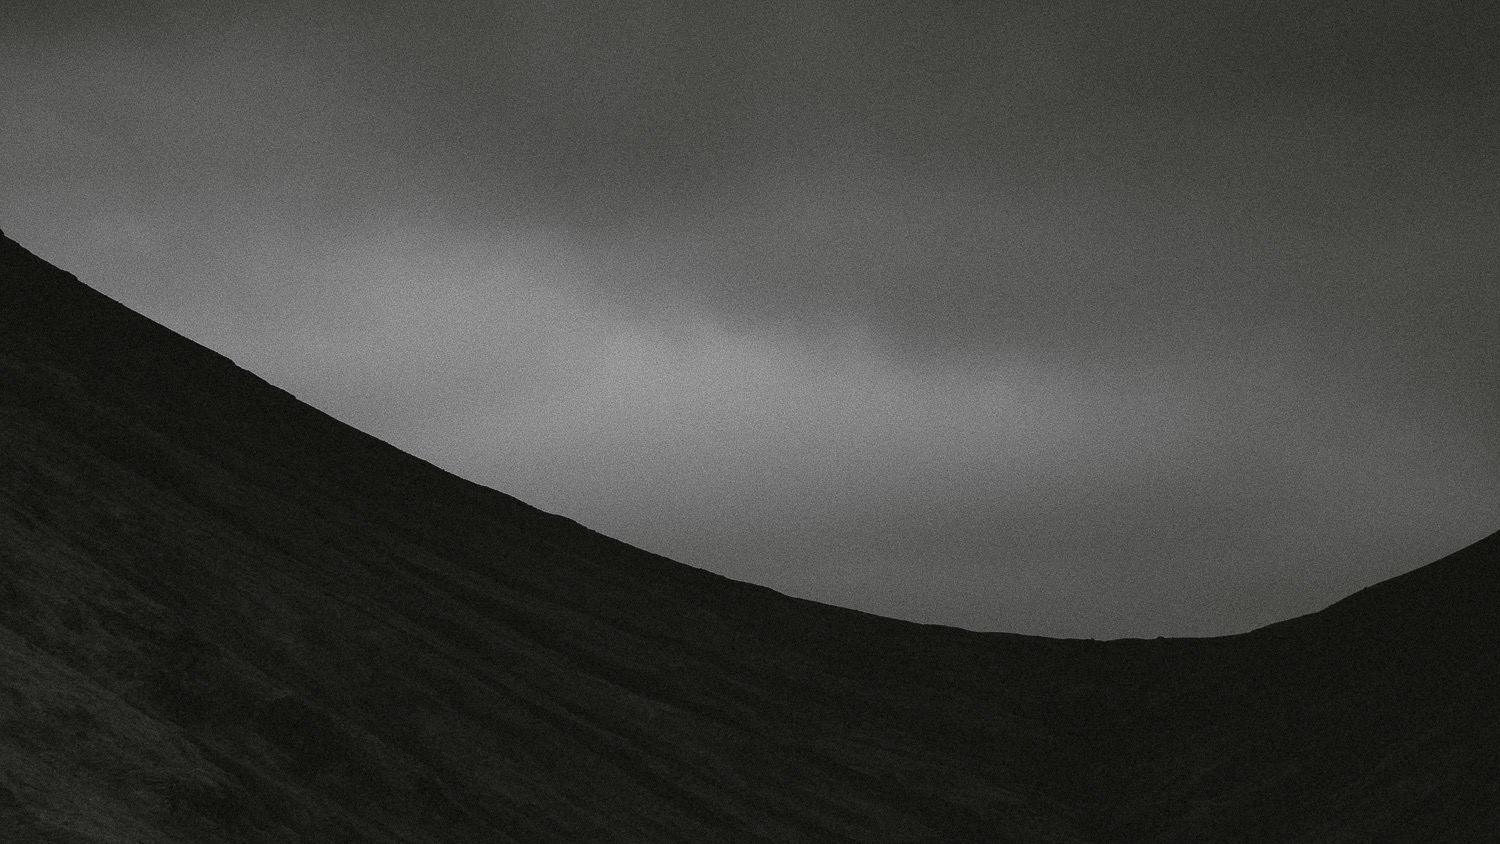 0020-scotland-tamron-le monde de la photo-paysage-20190508105128-compress.jpg